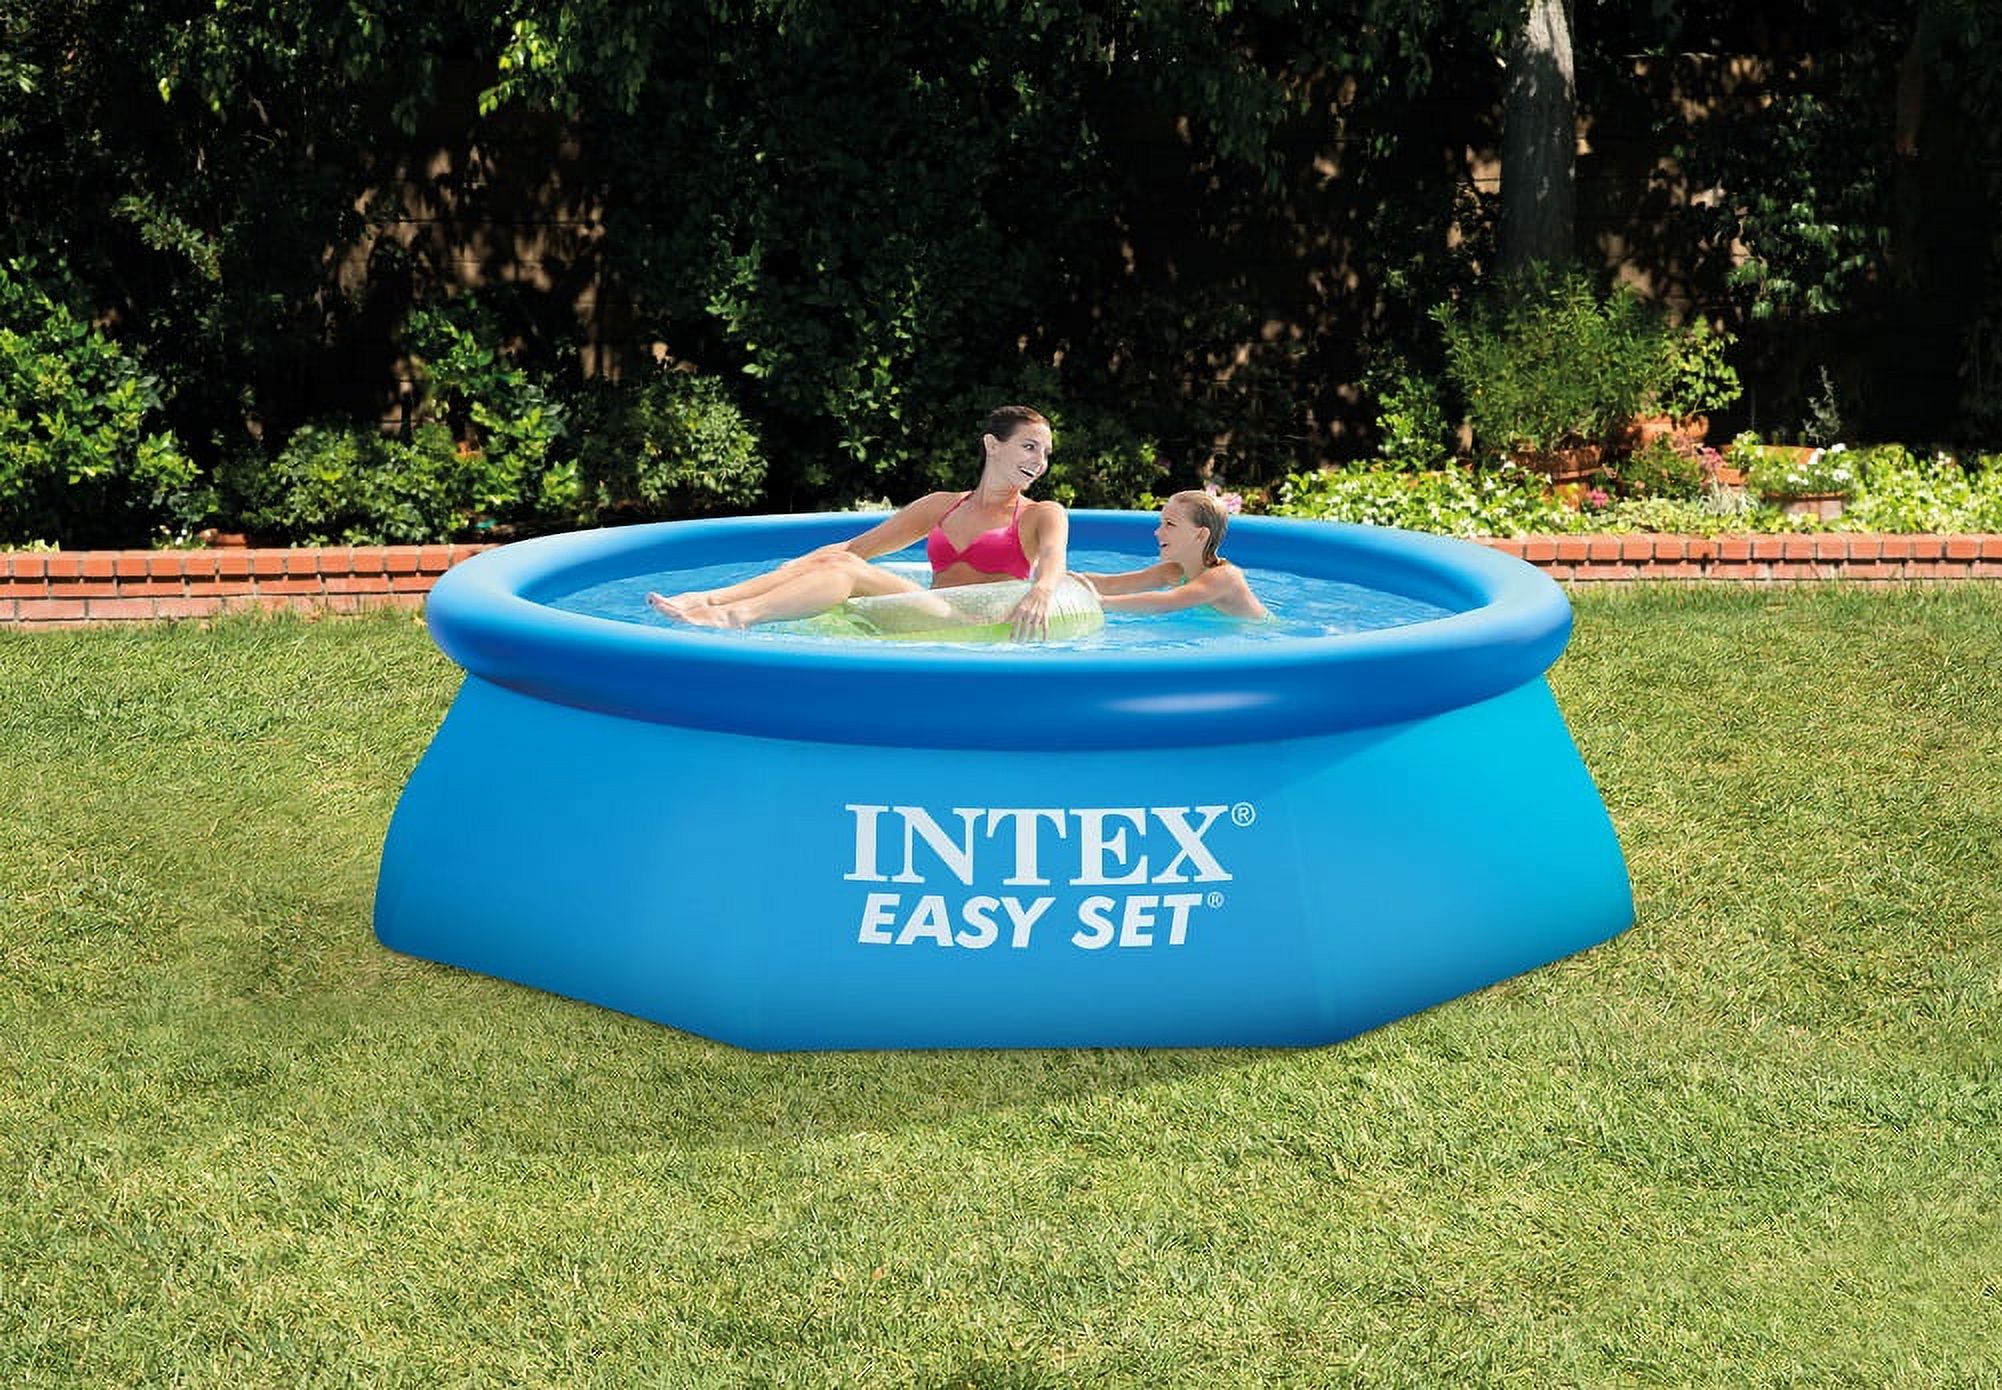 Intex Swimming Pool- Easy Set, 8ft.x30in. - image 5 of 5